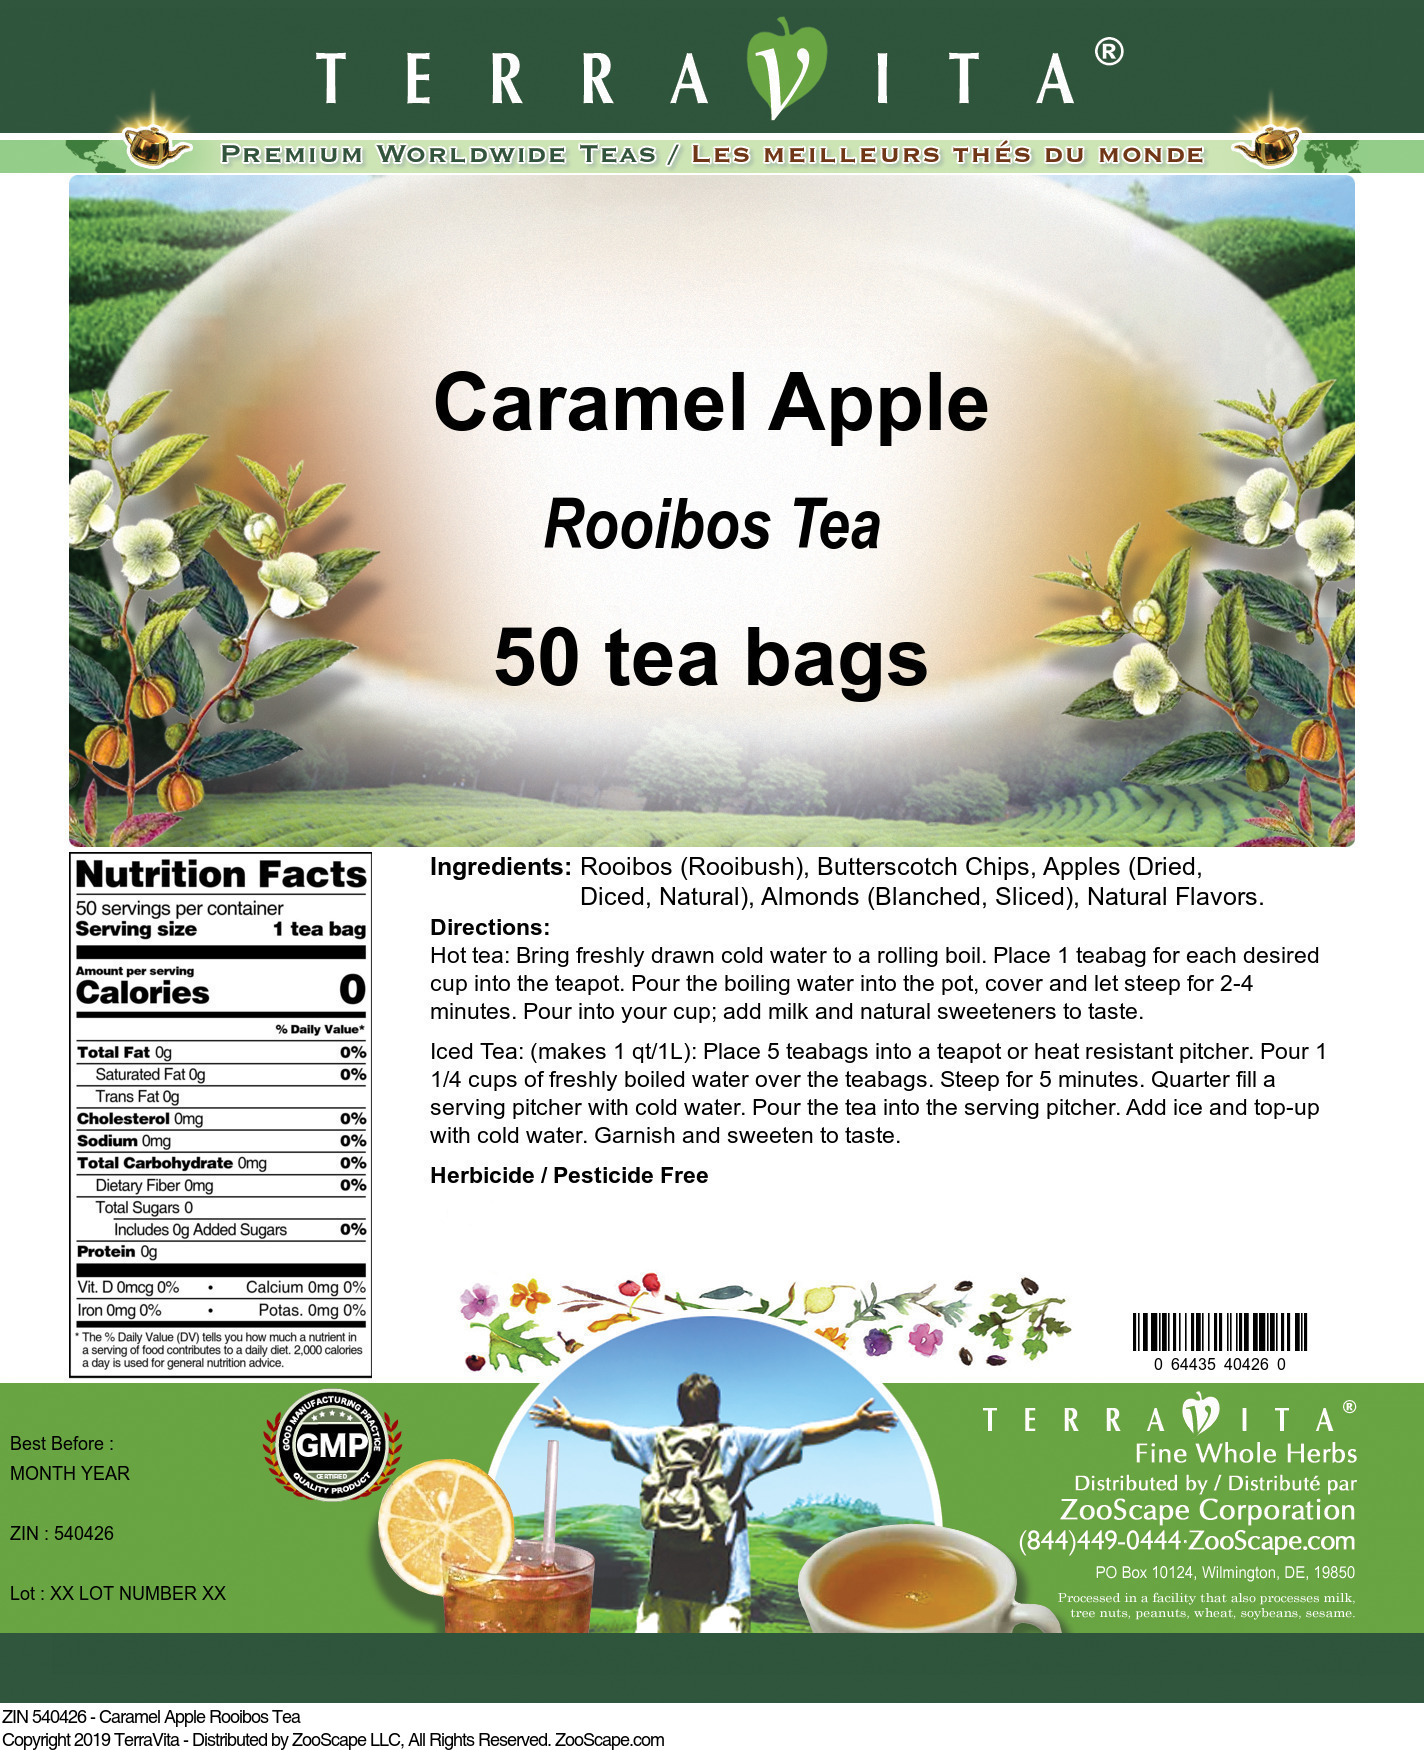 Caramel Apple Rooibos Tea - Label